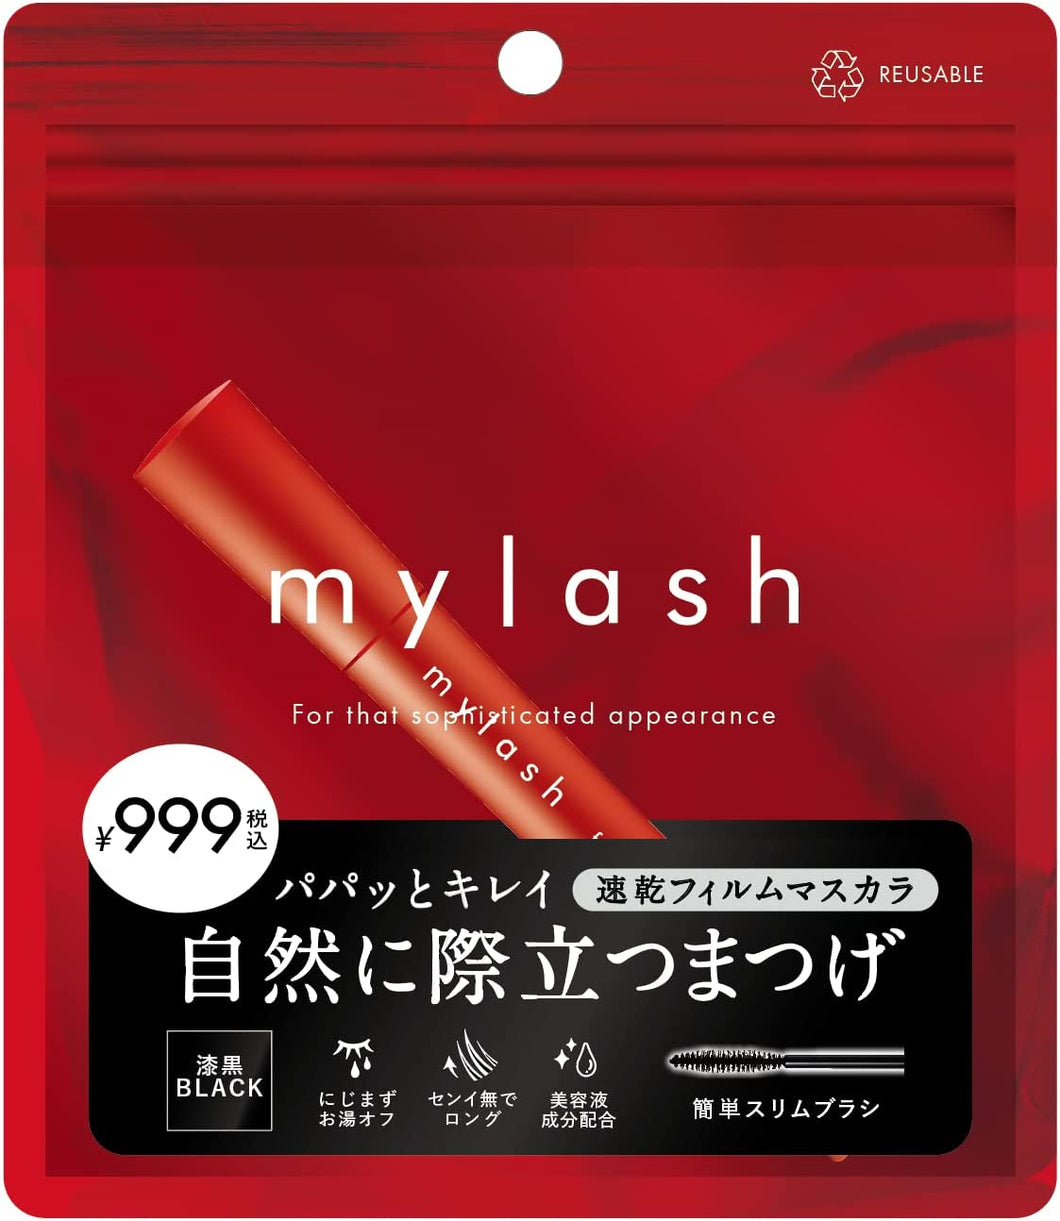 Imju mylash advanced mascara